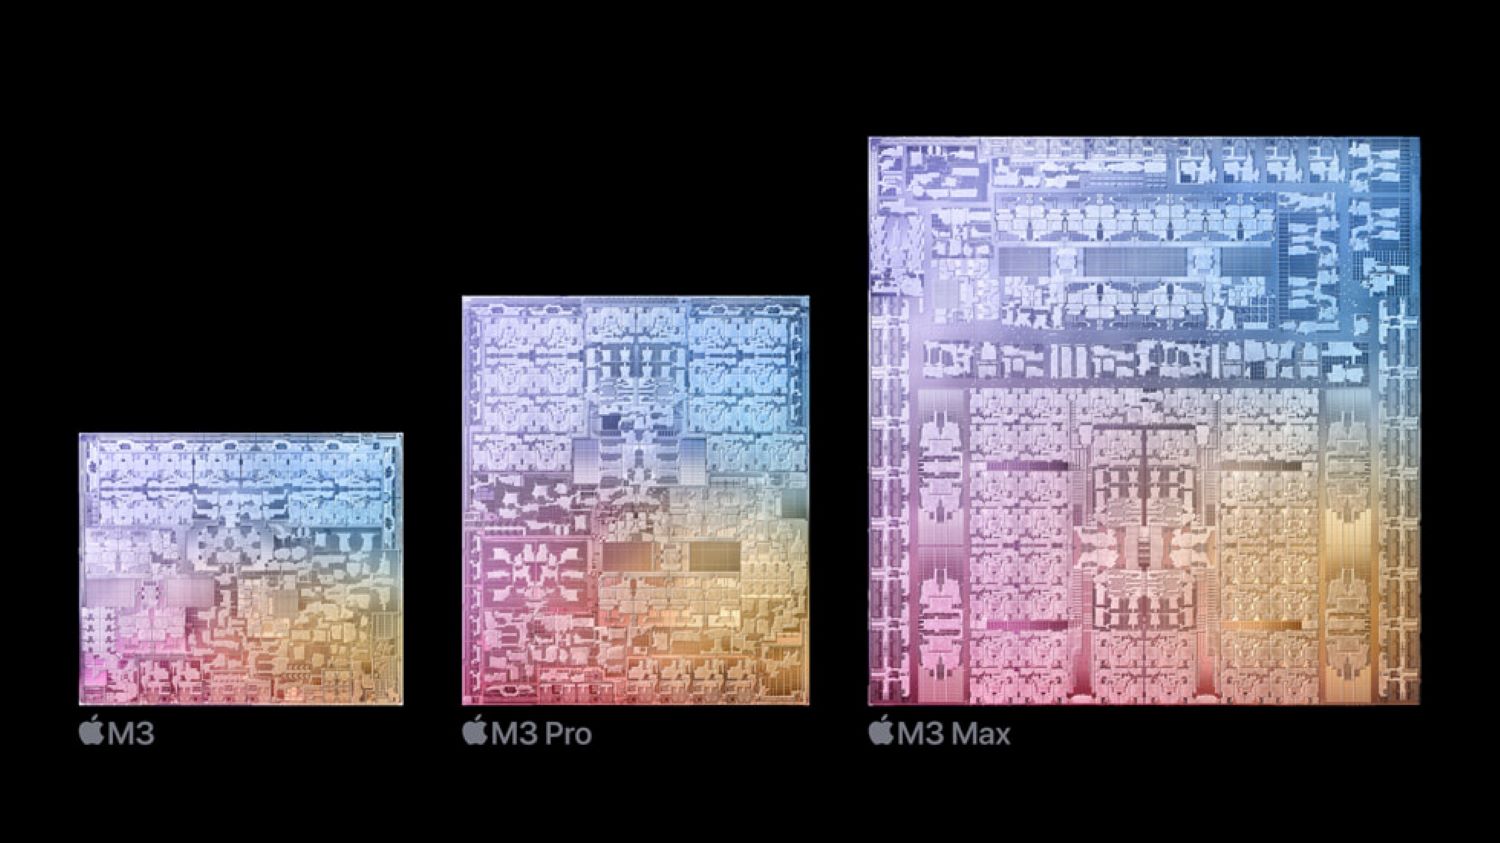 Apple M3 chip